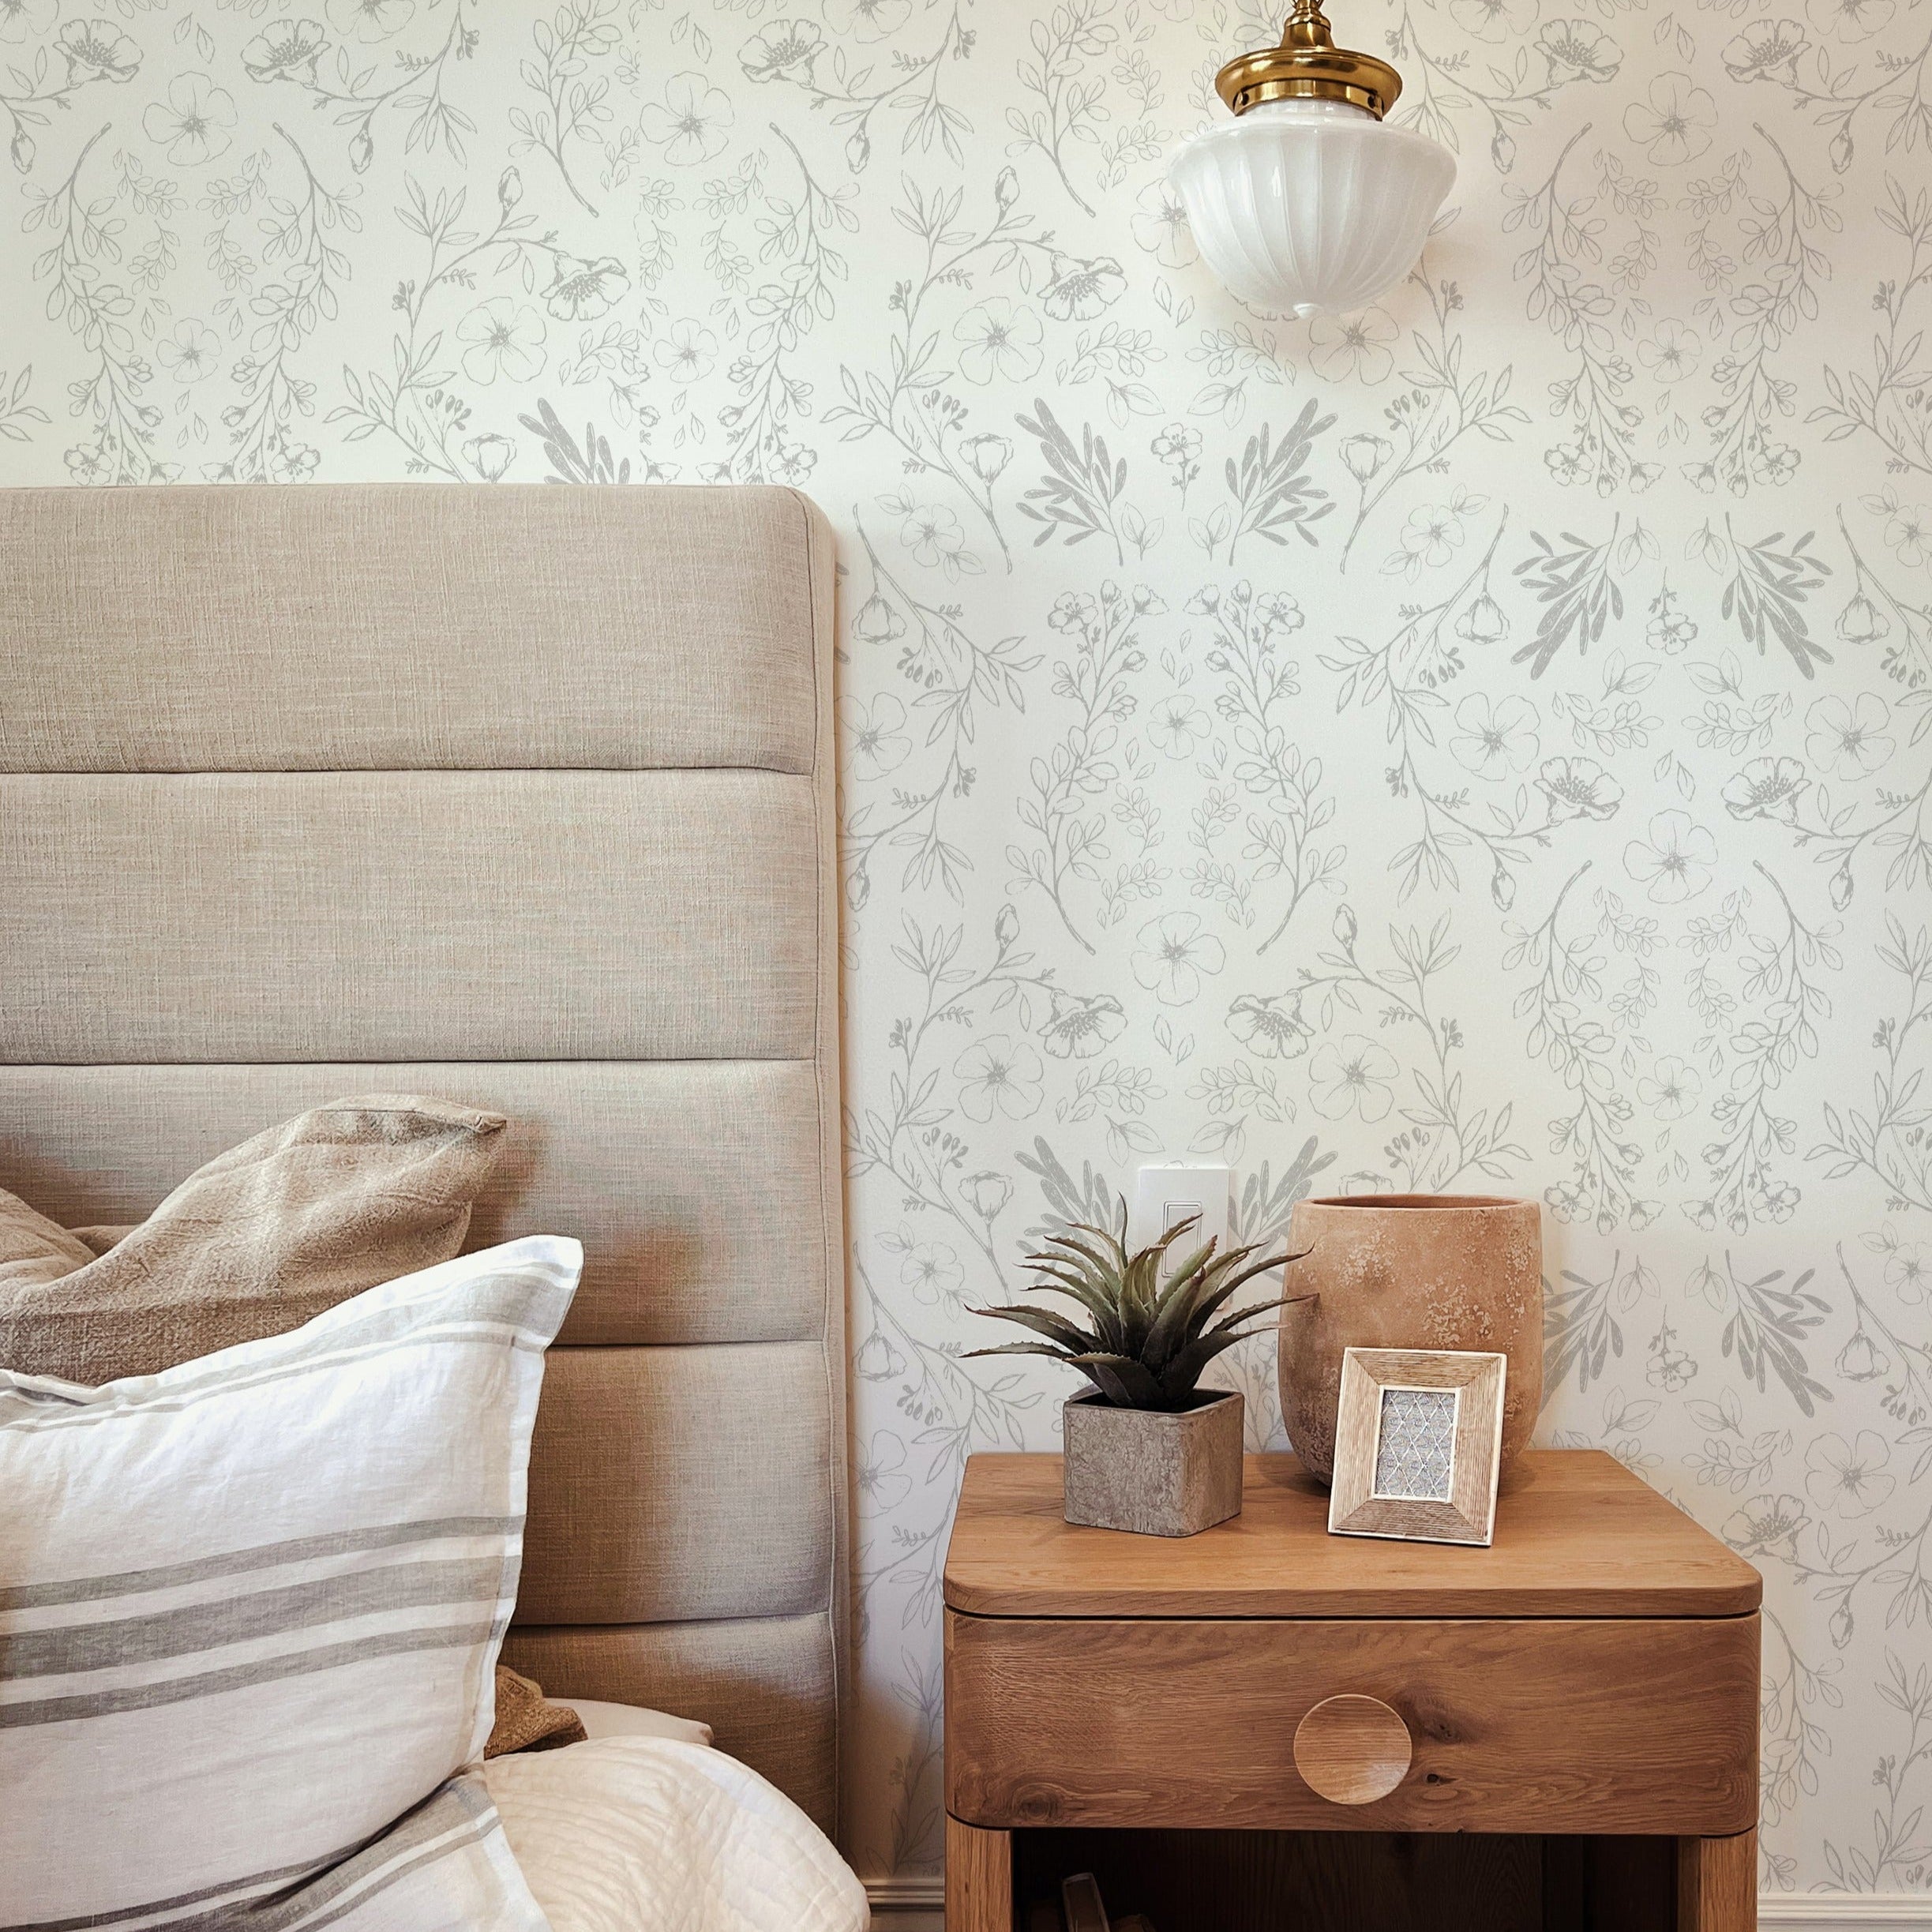 wallpaper, peel and stick wallpaper, Home decor ,Floral wallpaper,  Rustic vintage floral wallpaper, Bedroom wallpaper,